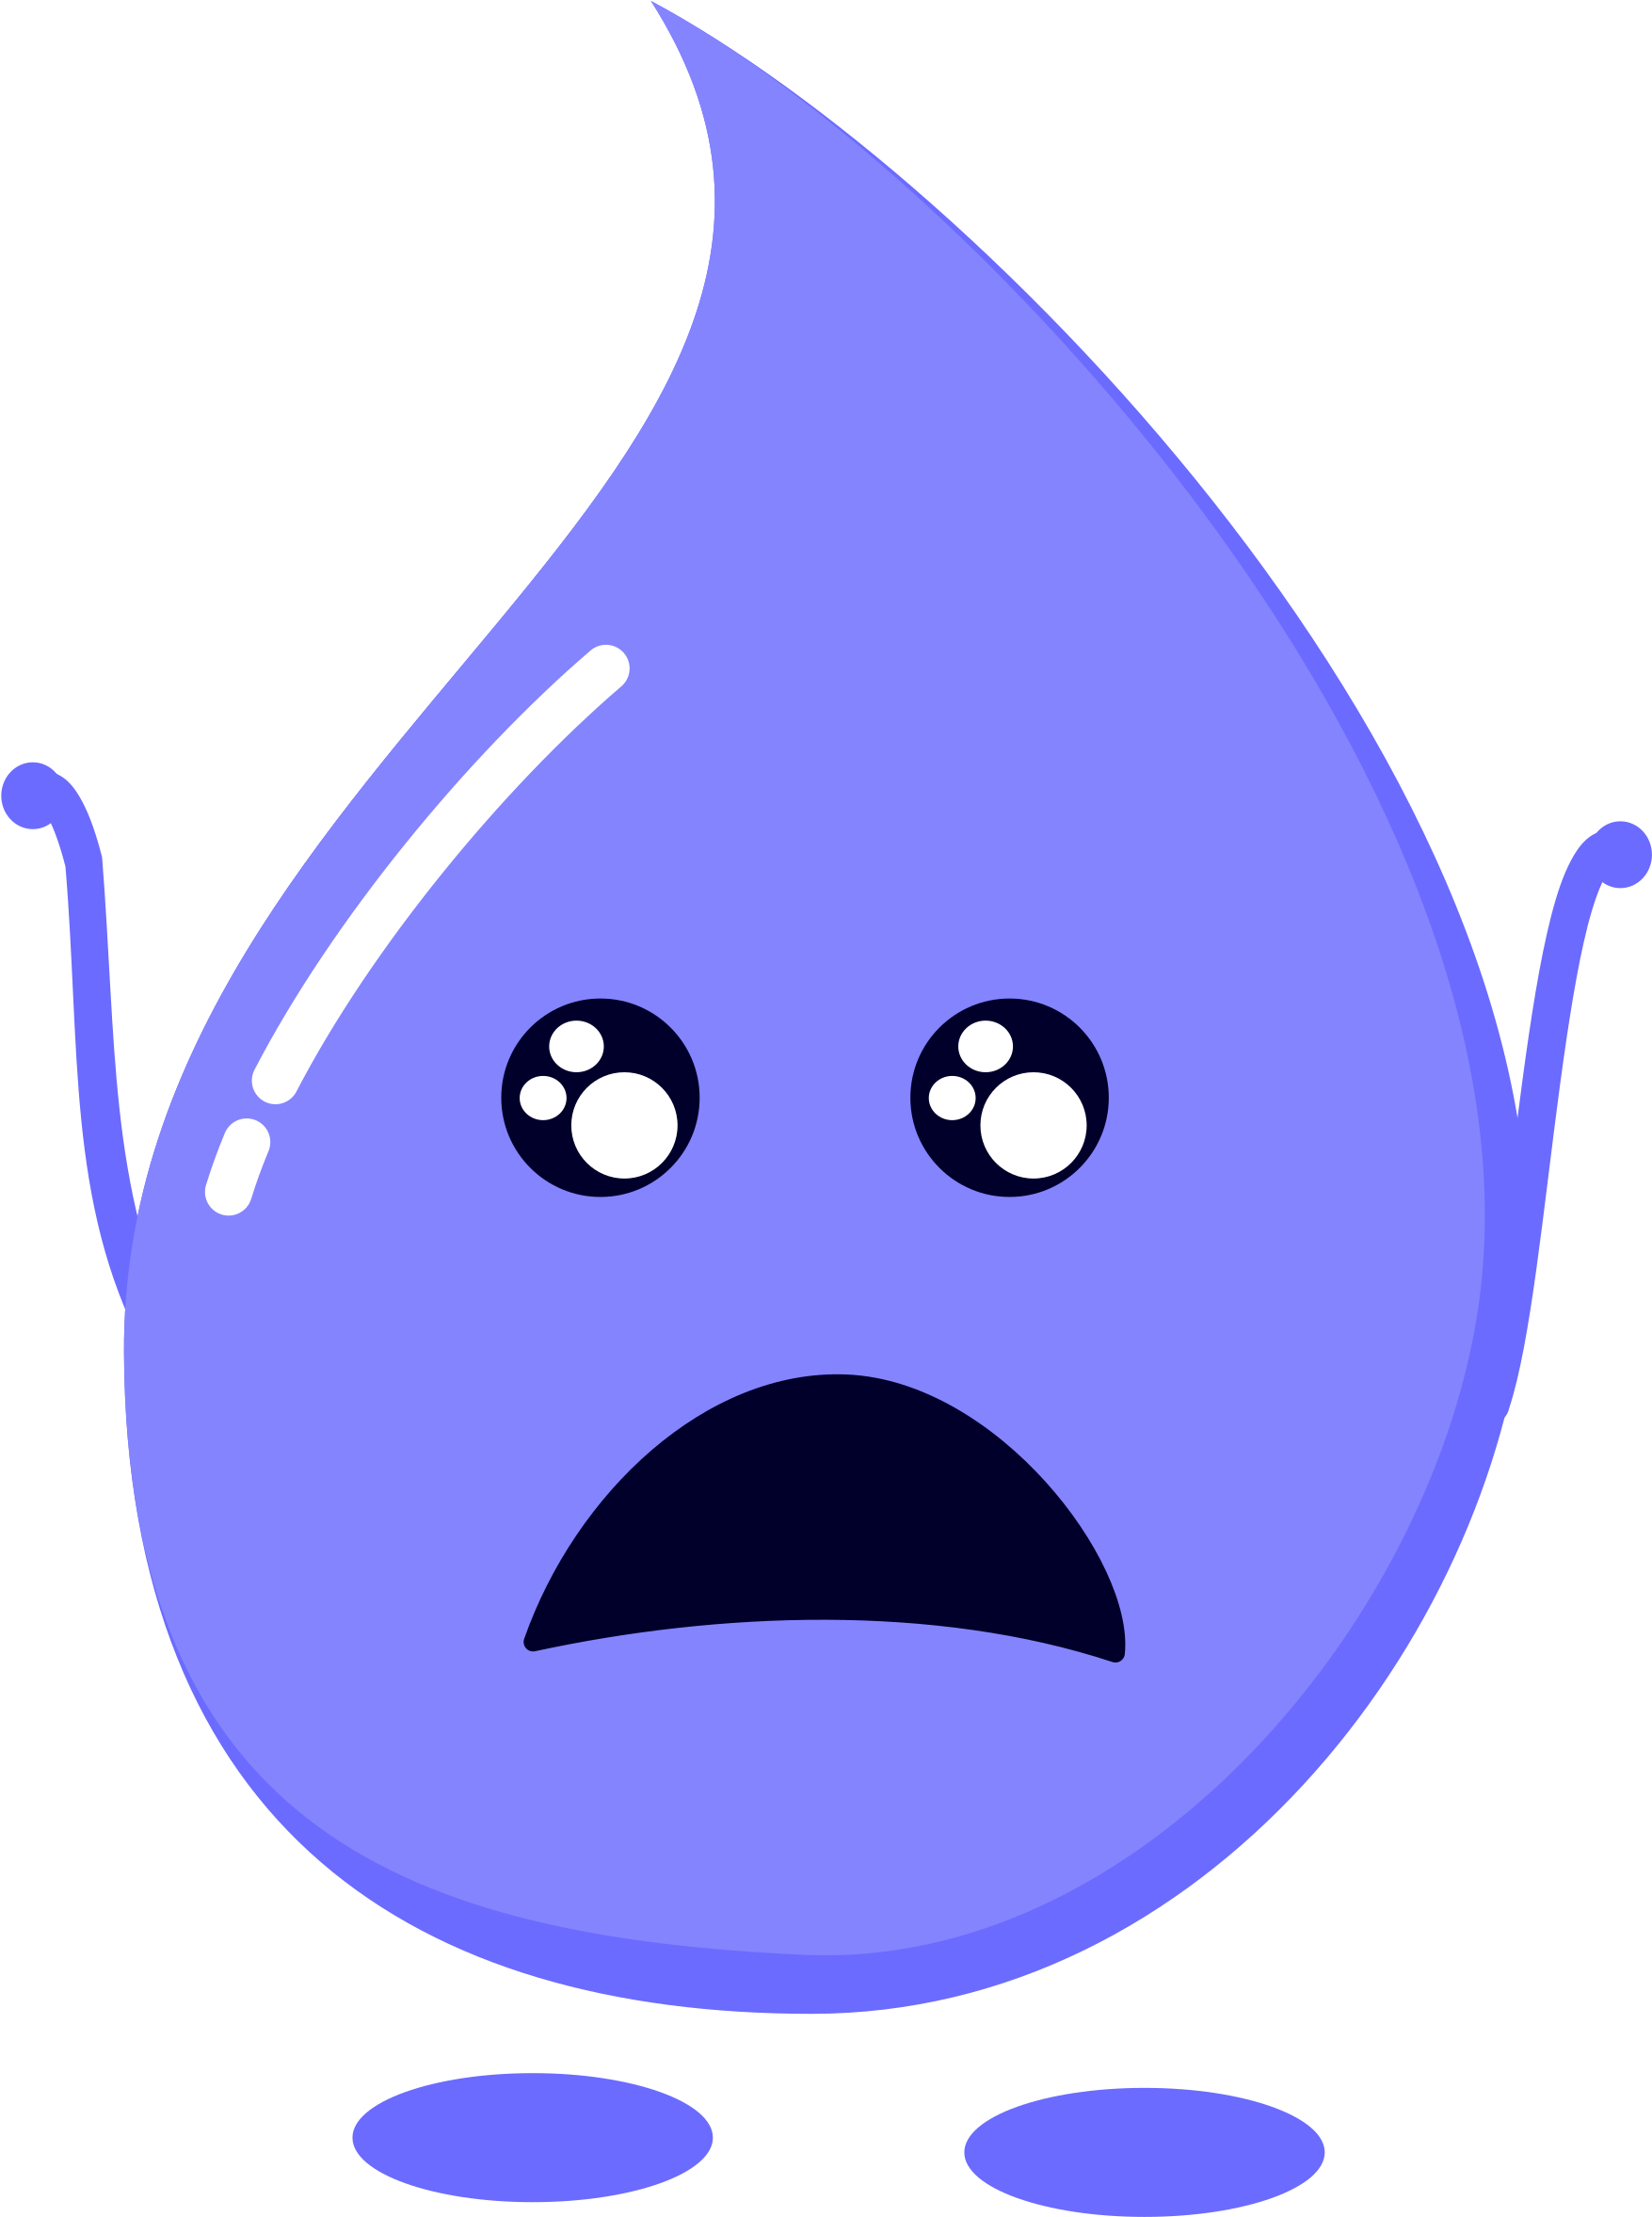 A Cartoon Of A Drop Of Water With A Sad Face